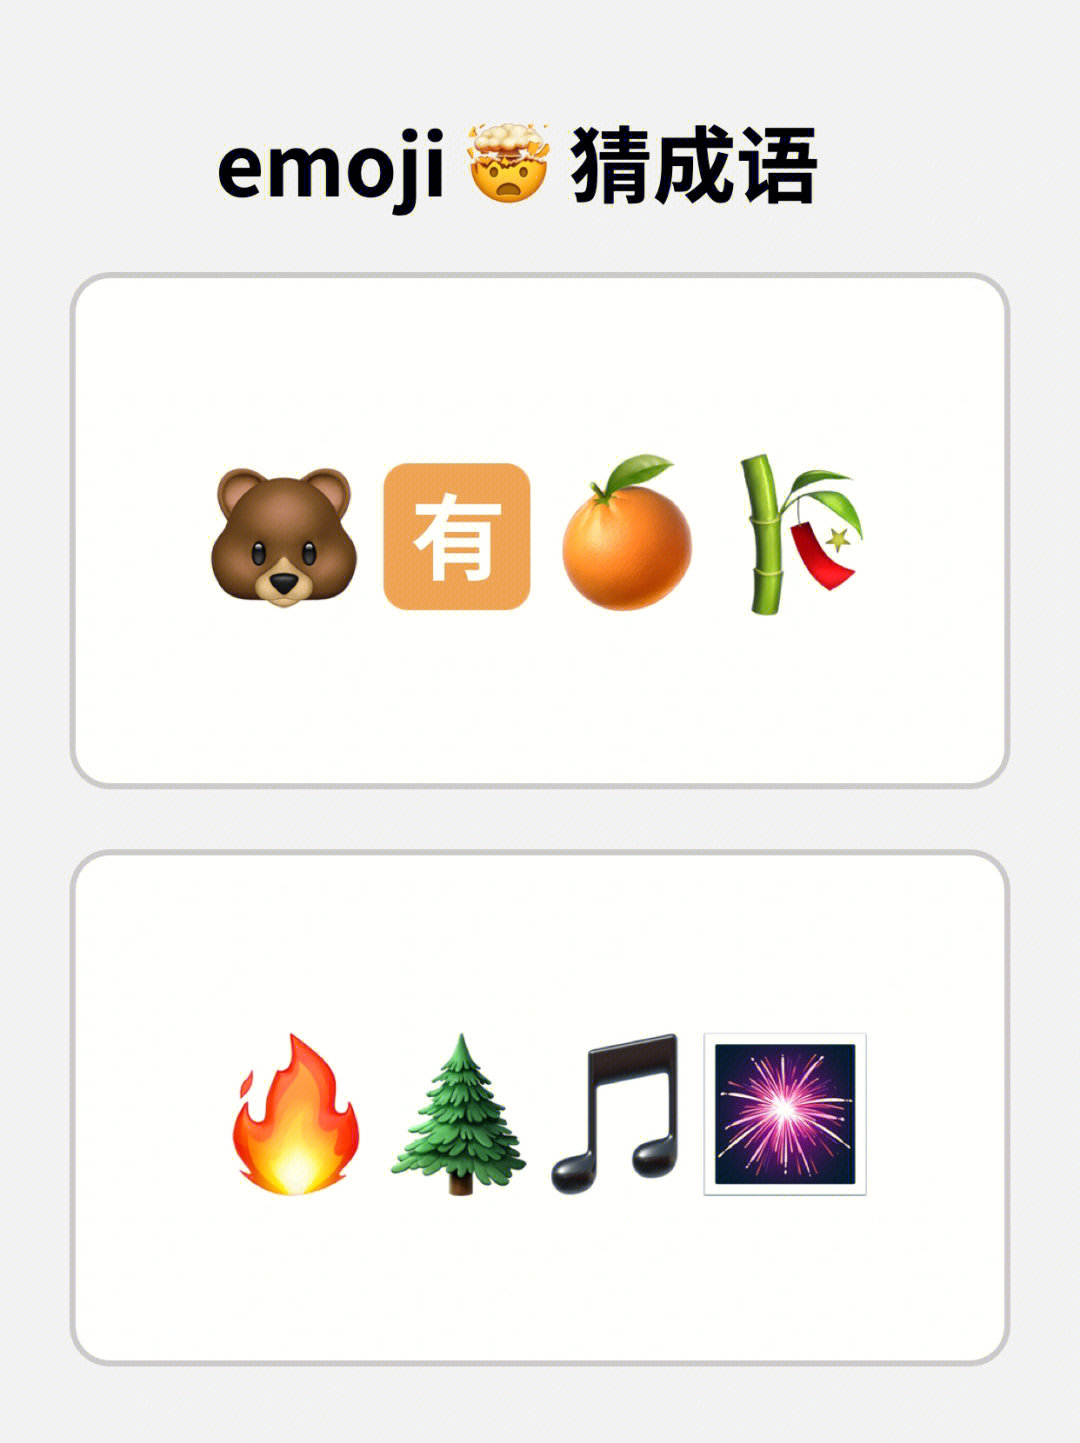 emoji01表情包8聚会团建小游戏必玩